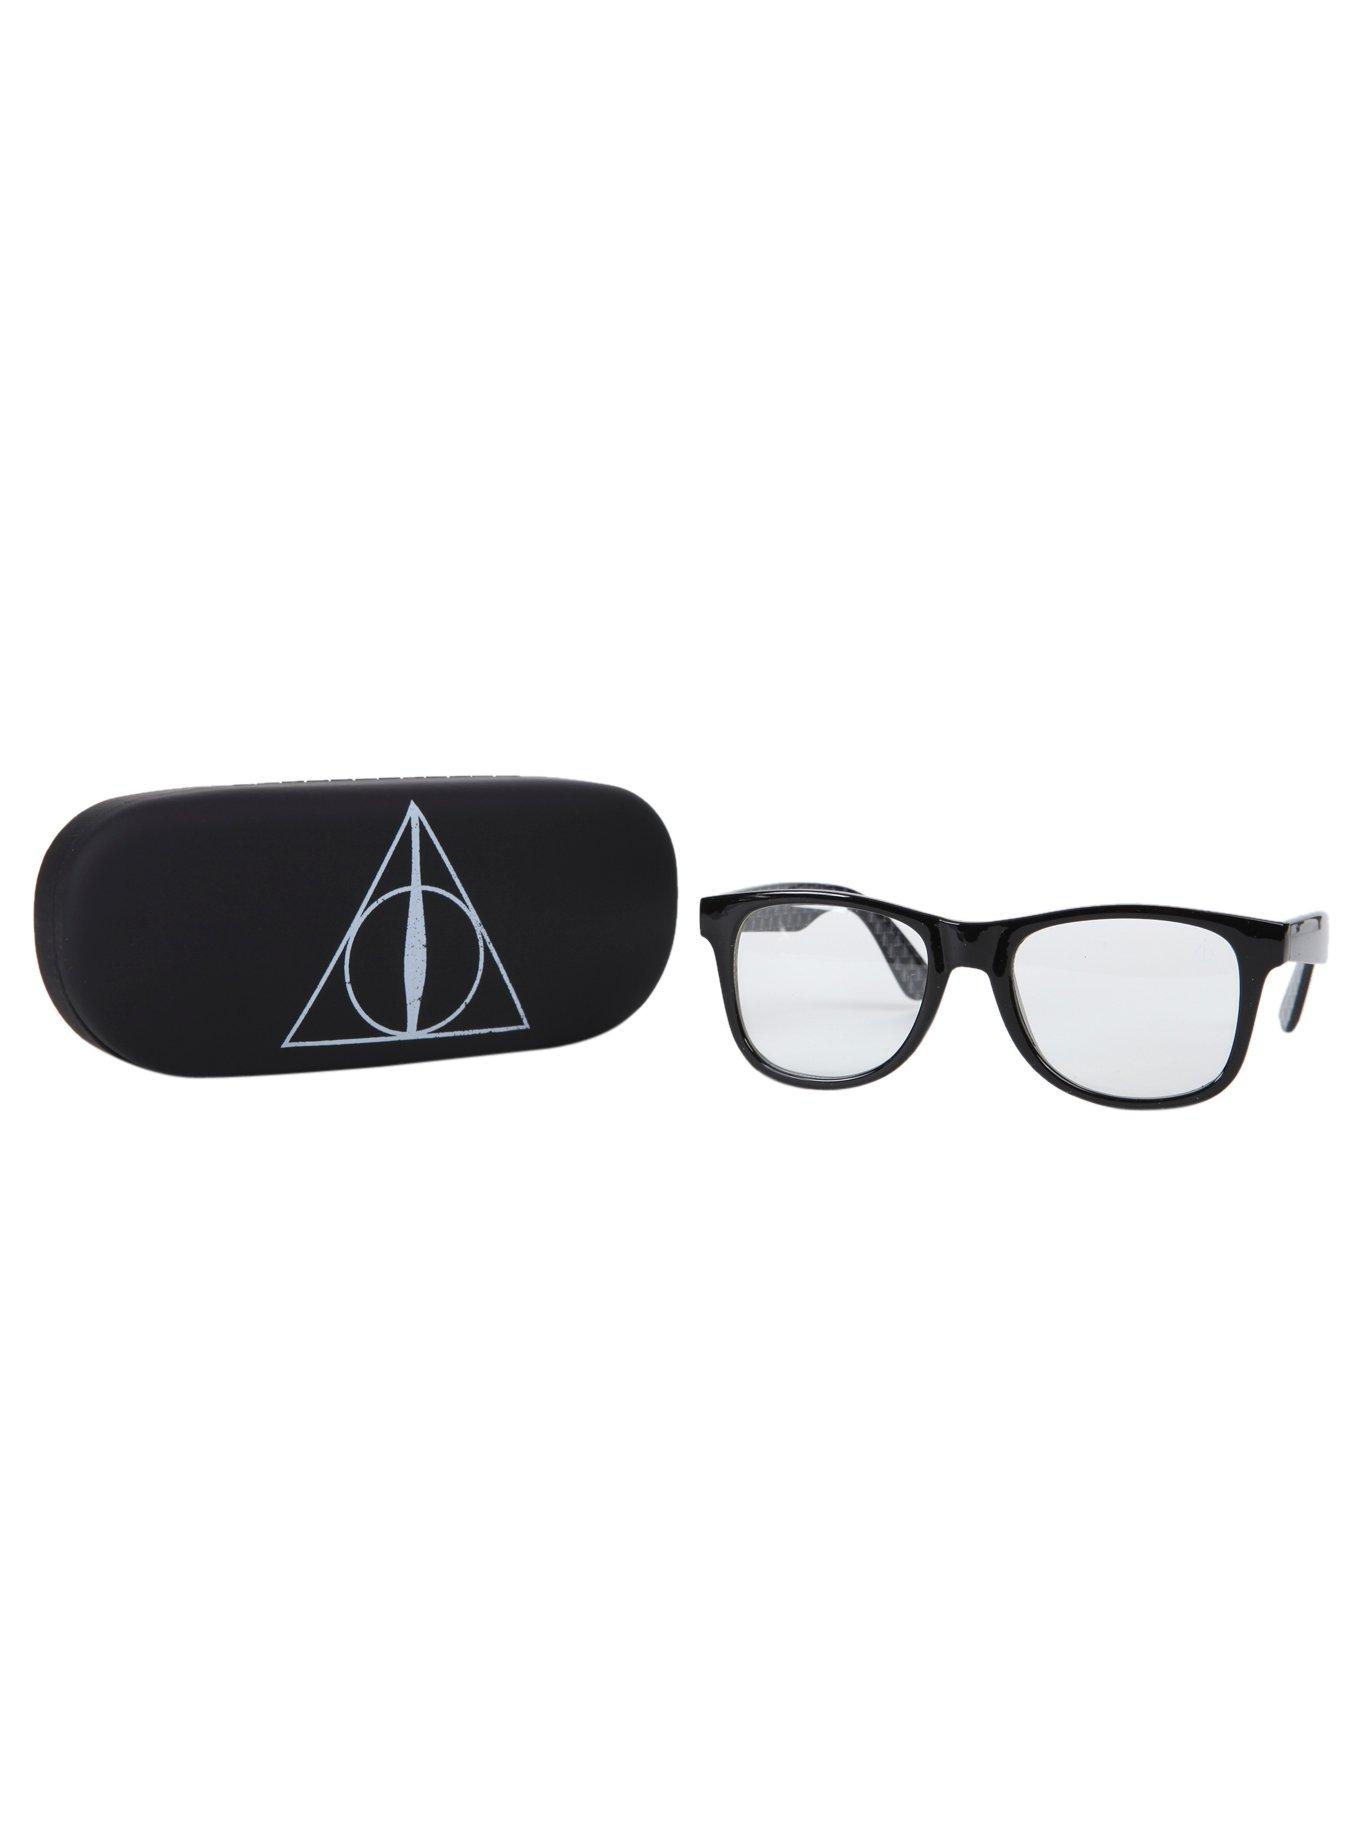 Harry Potter Deathly Hallows Glasses & Case Gift Set